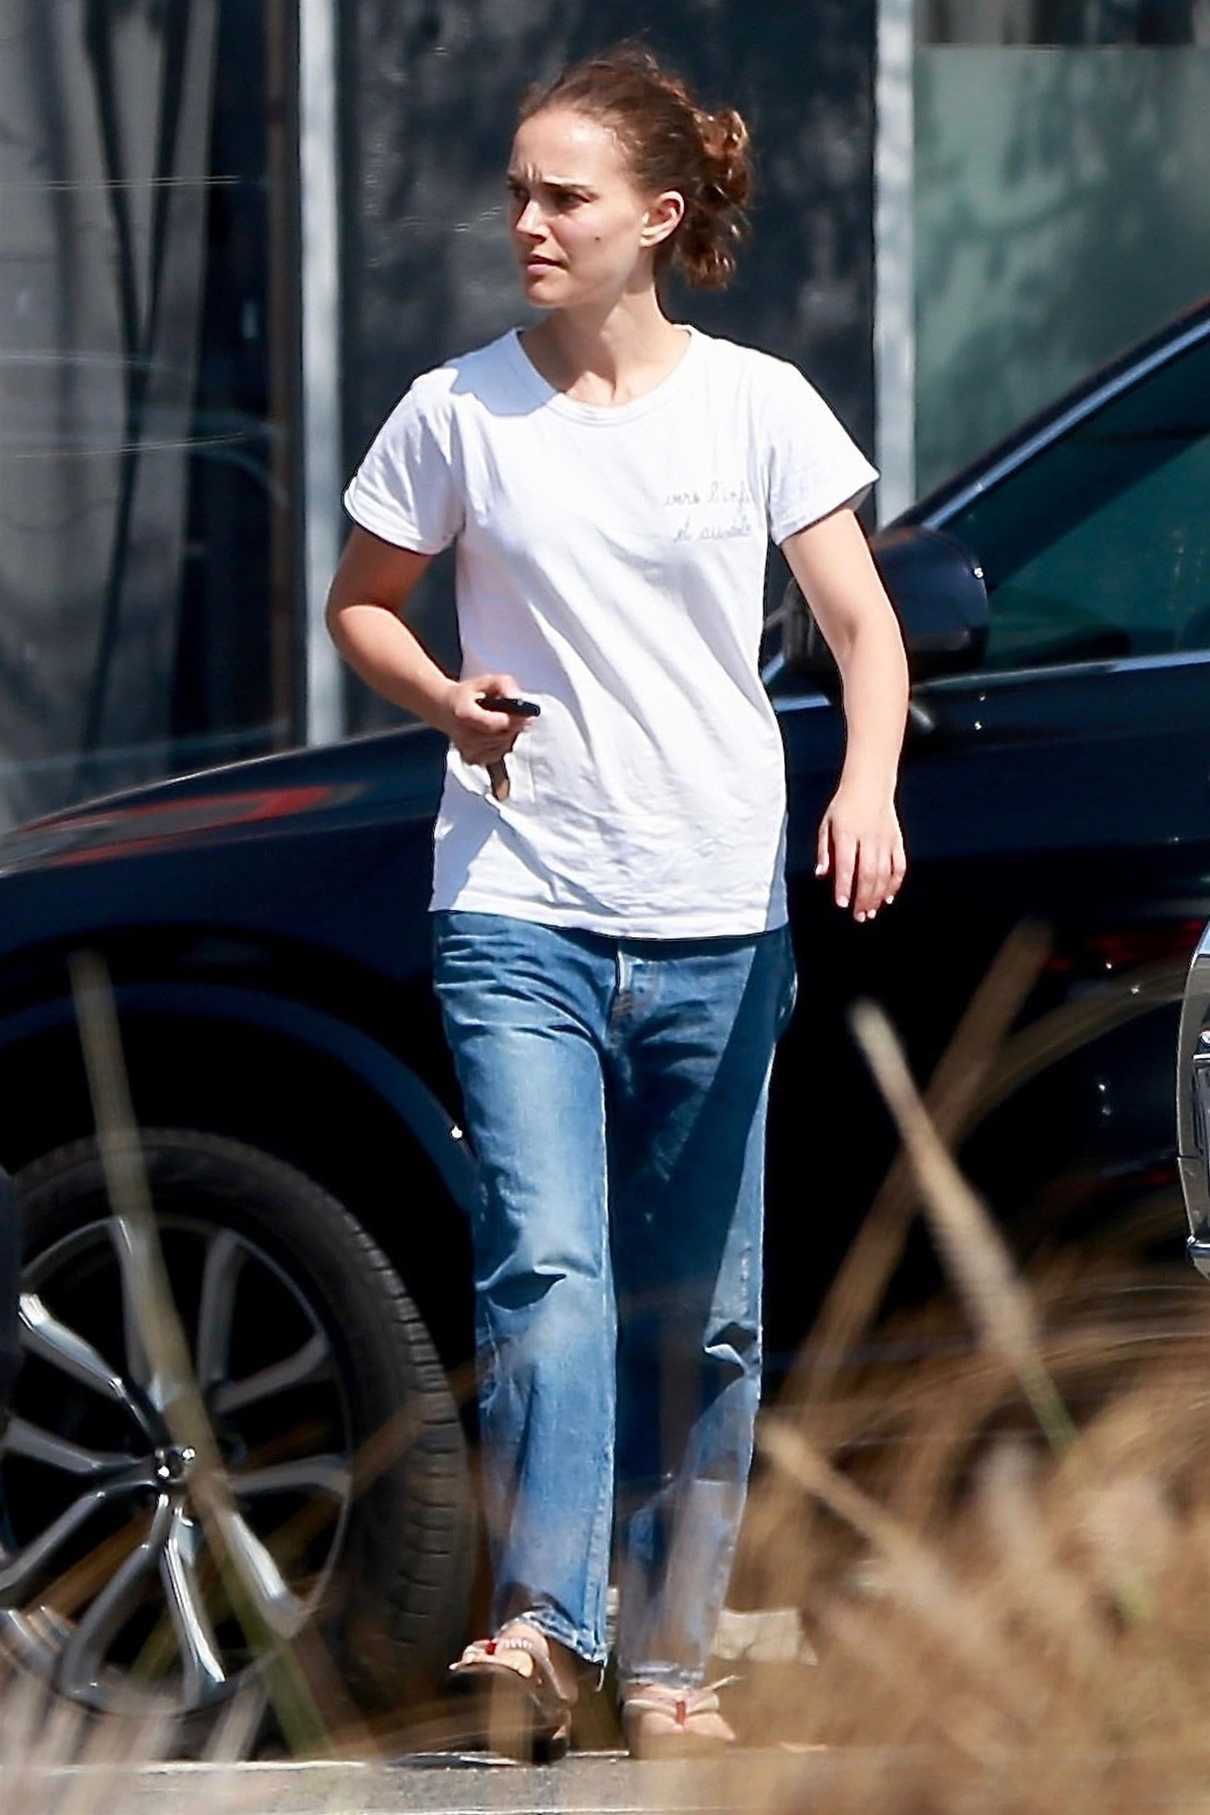 Natalie Portman in a White T-Shirt